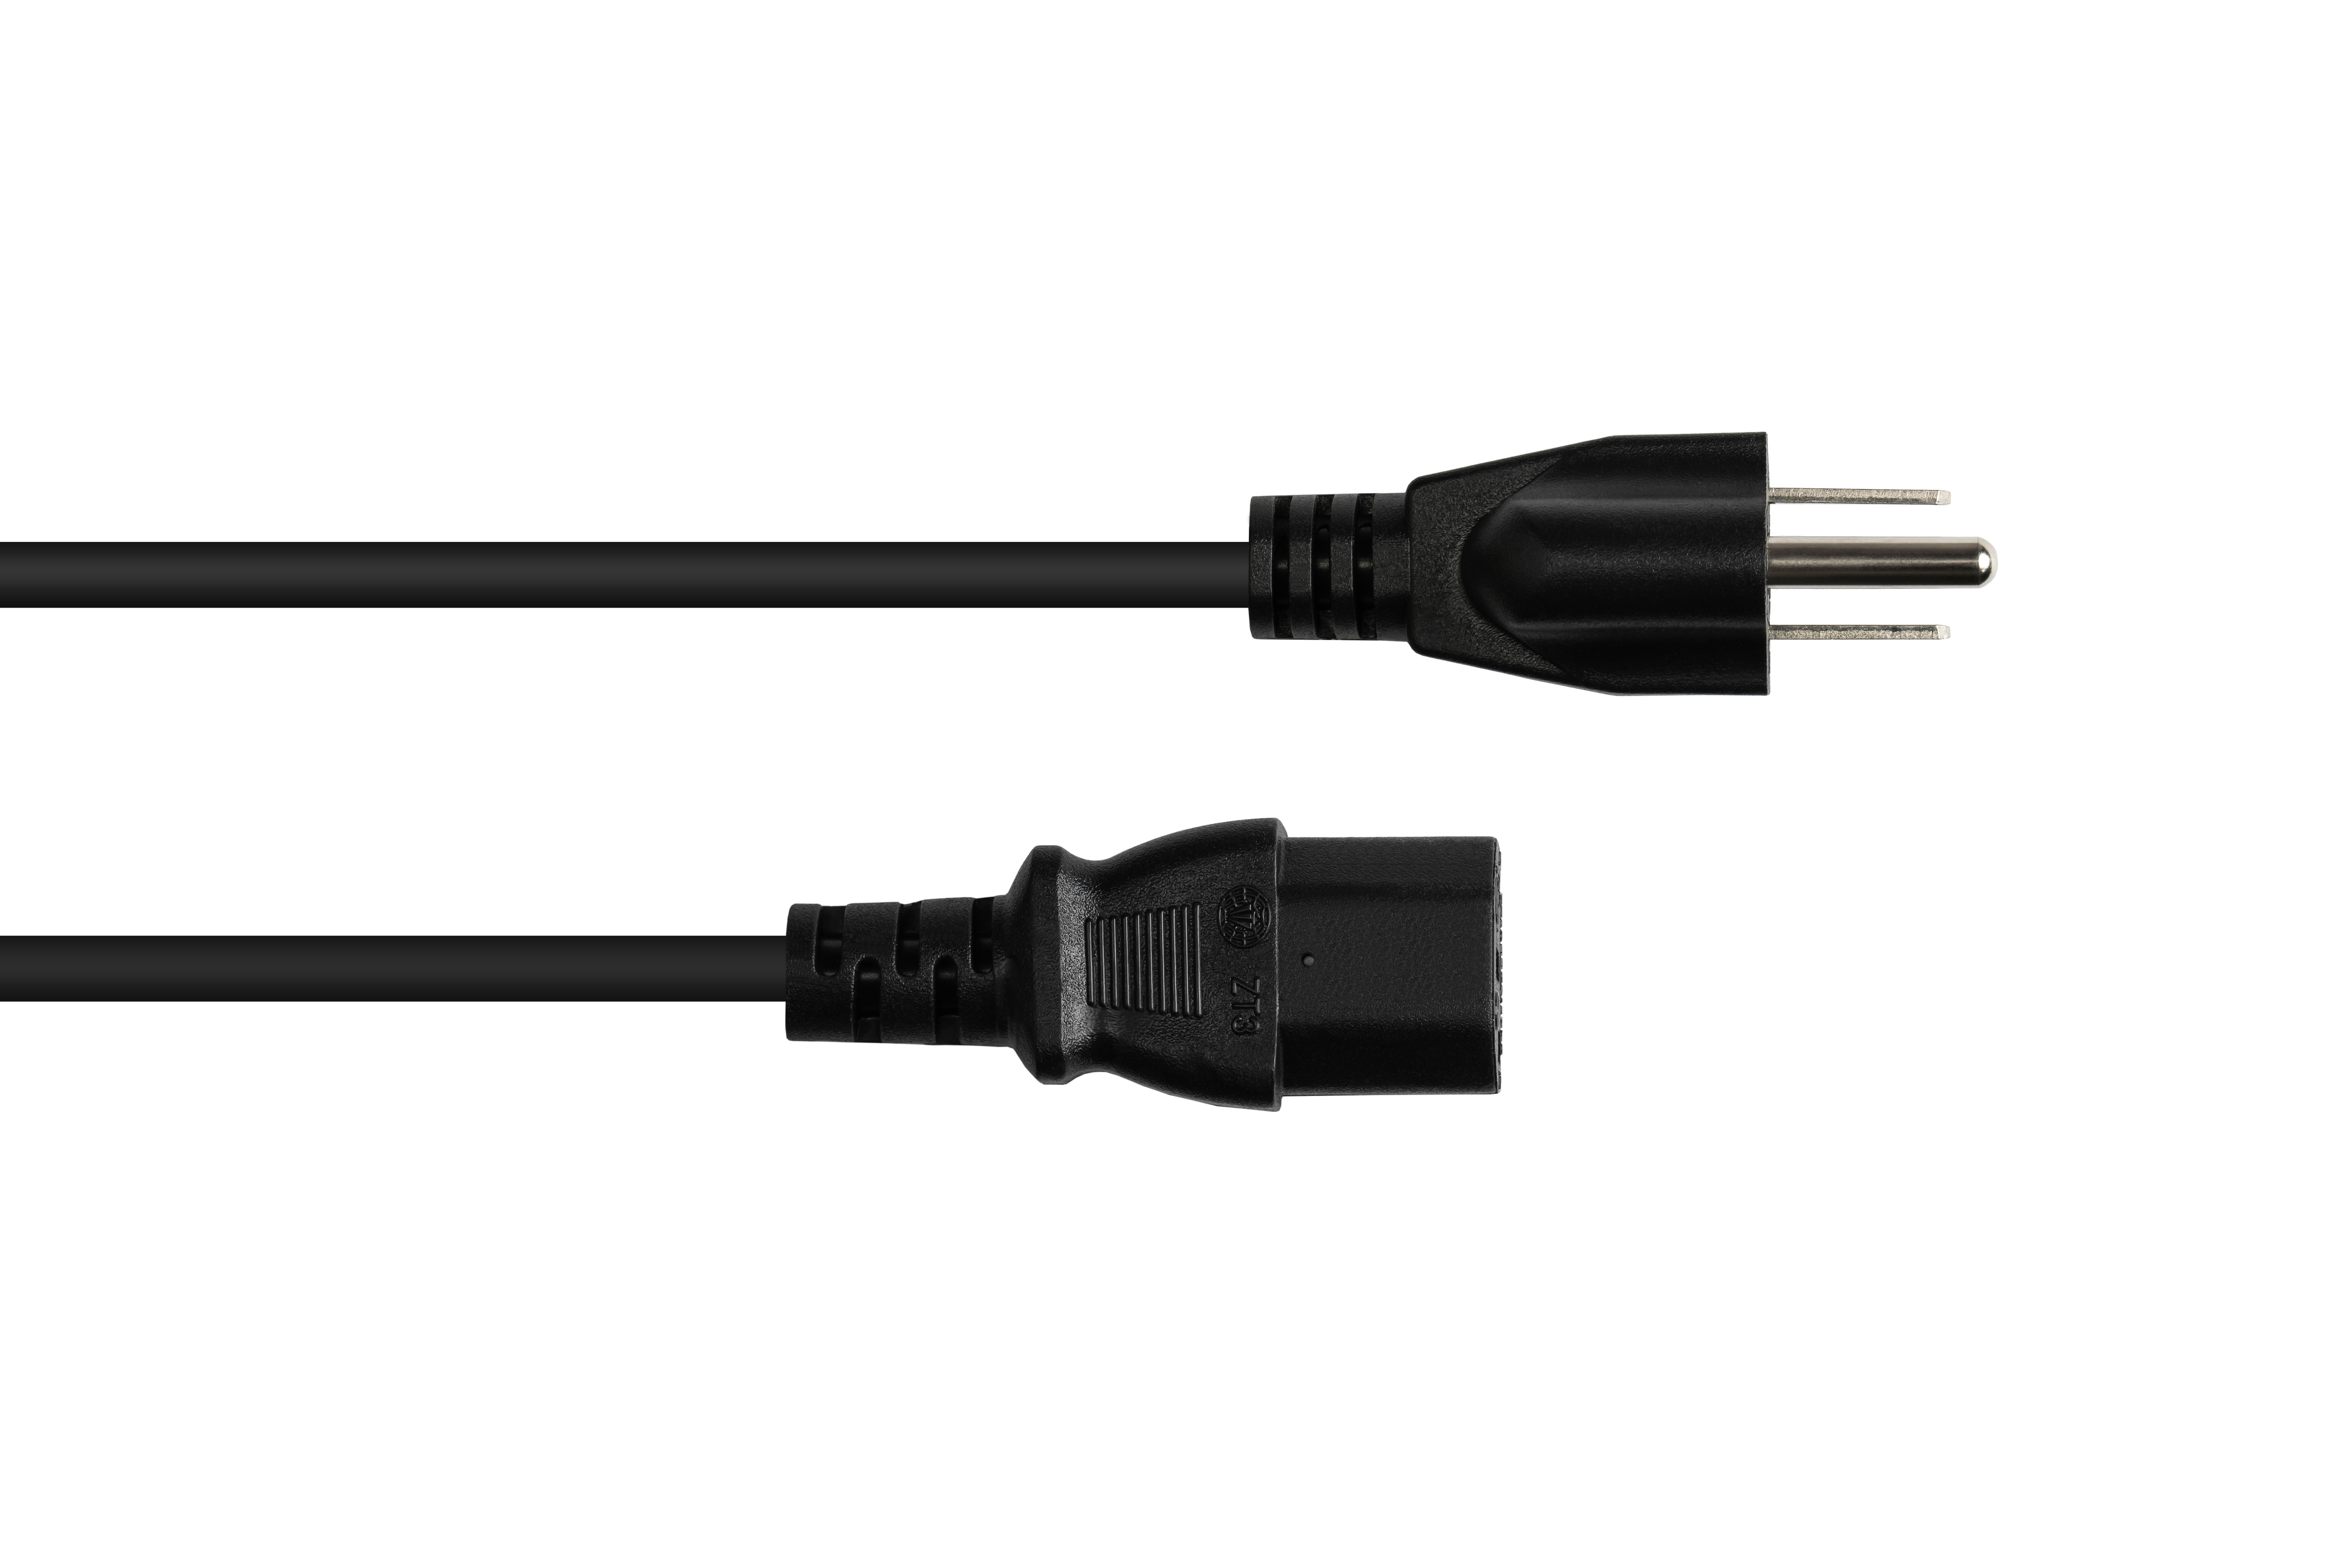 C13 schwarz 5-15P) an UL, (NEMA Stromkabel, GOOD schwarz, AWG18 (gerade), Netz-Stecker Typ CONNECTIONS Amerika/USA B